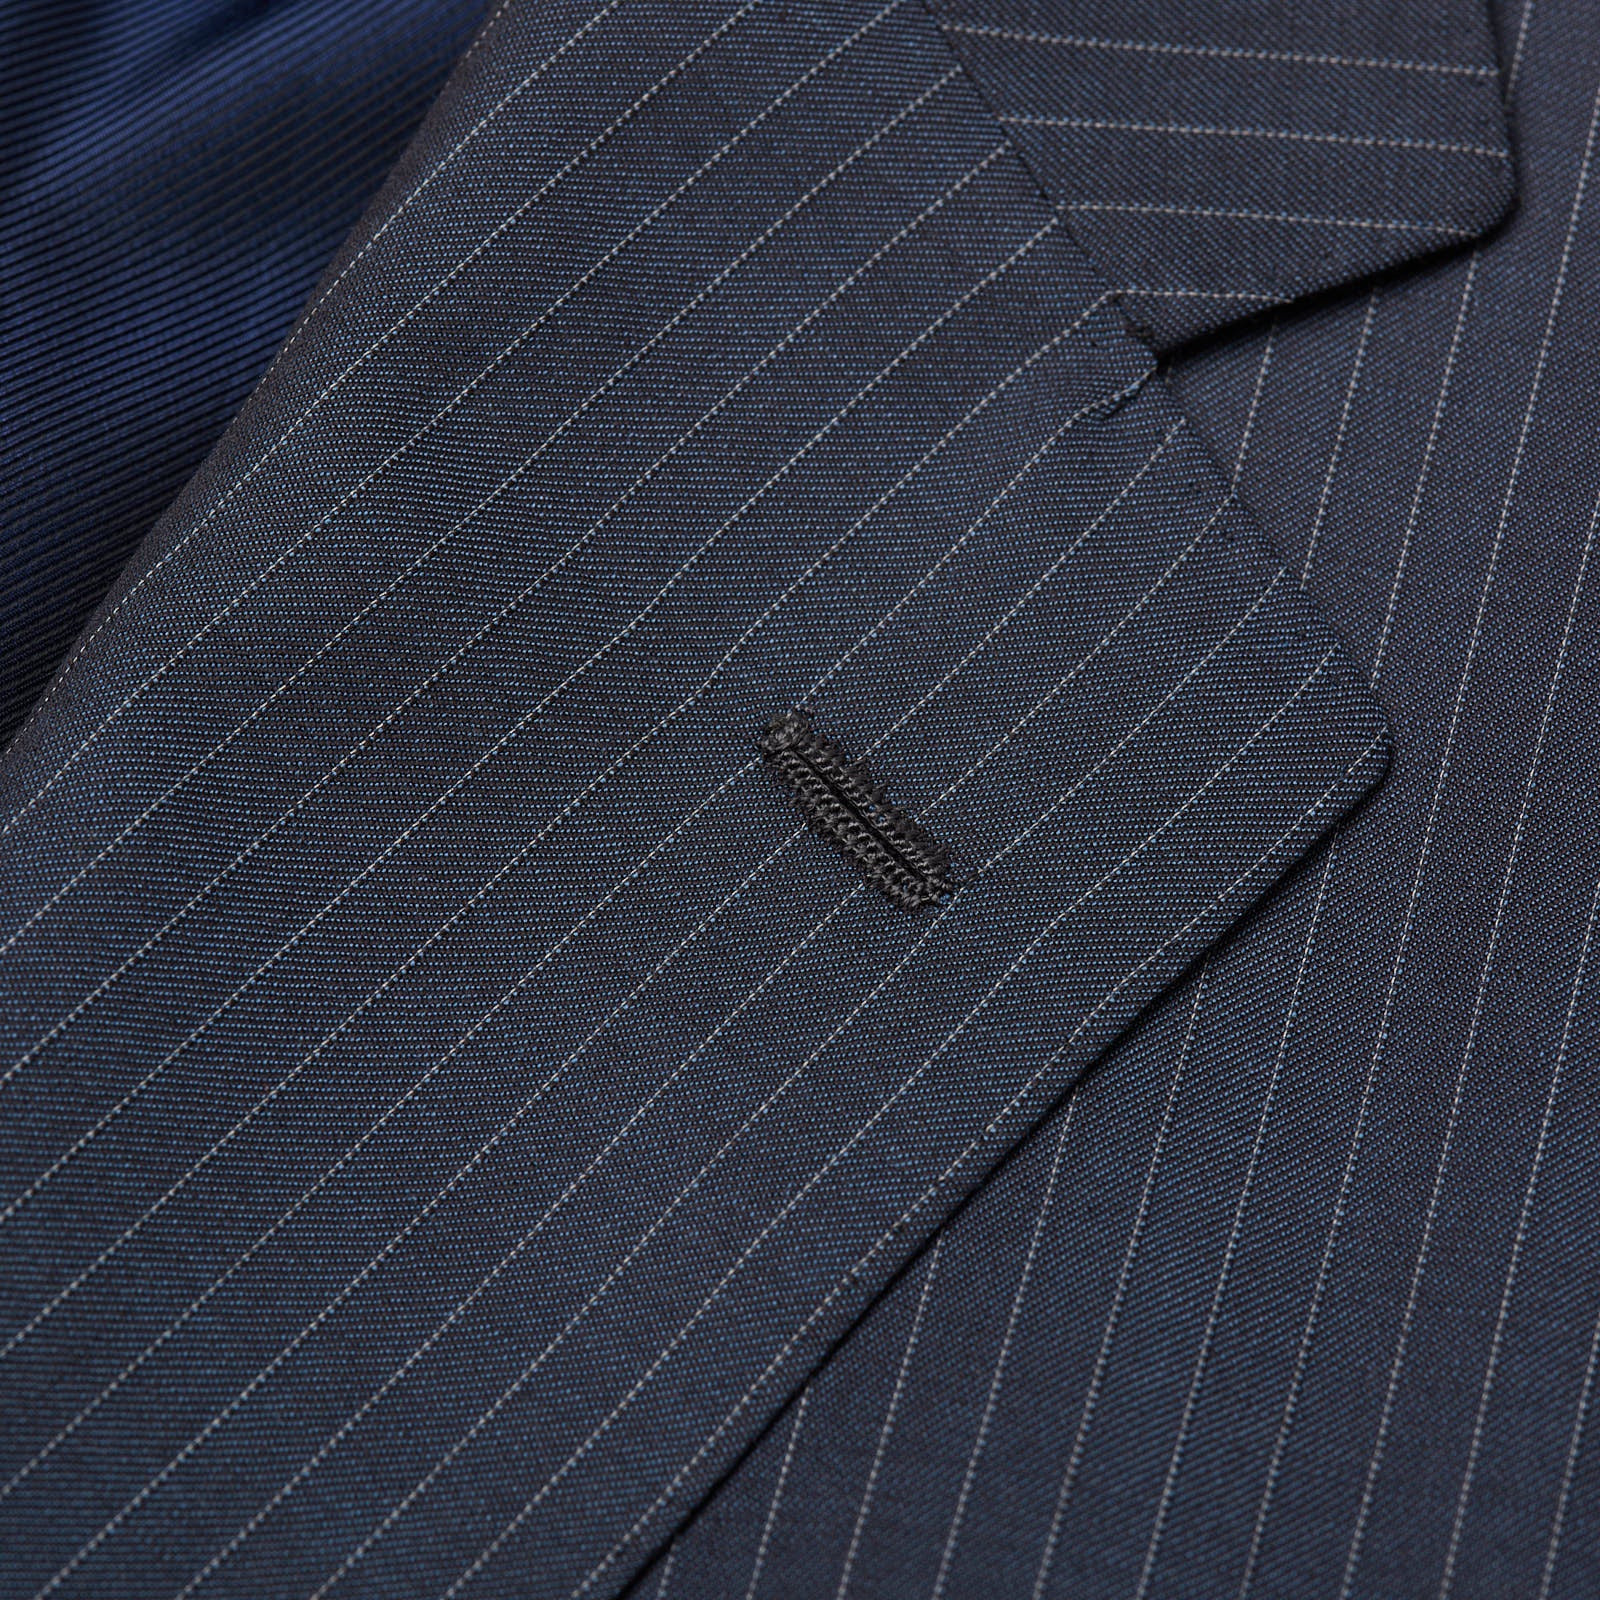 SARTORIA PARTENOPEA for VANNUCCI Blue Striped Wool Handmade Suit EU 52 NEW US 42